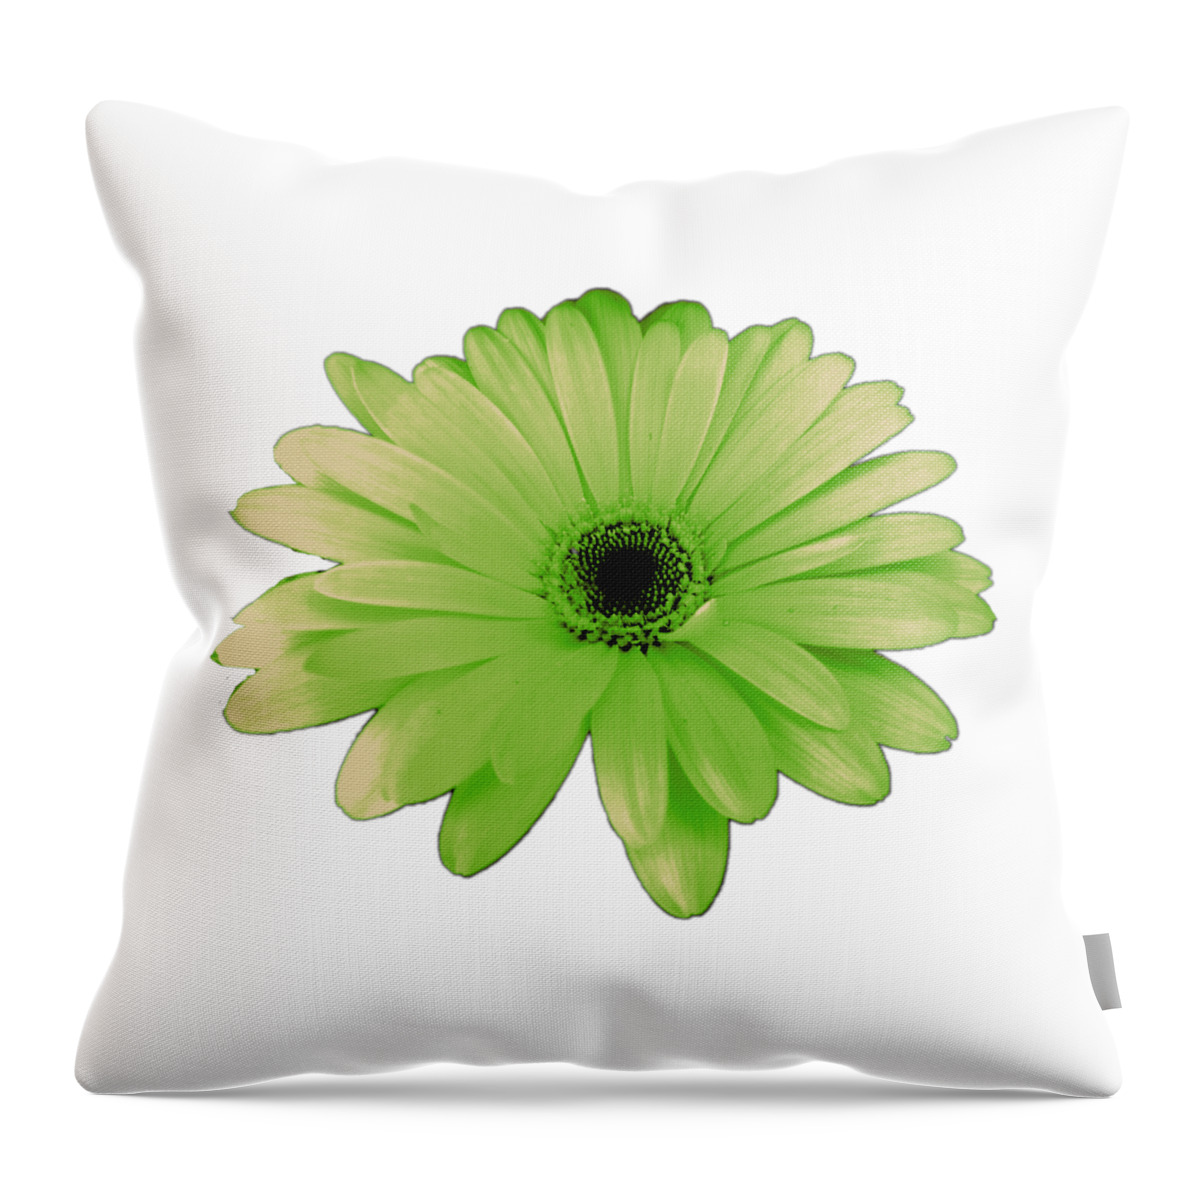 Digital Art Throw Pillow featuring the photograph Green Daisy Flower by Delynn Addams